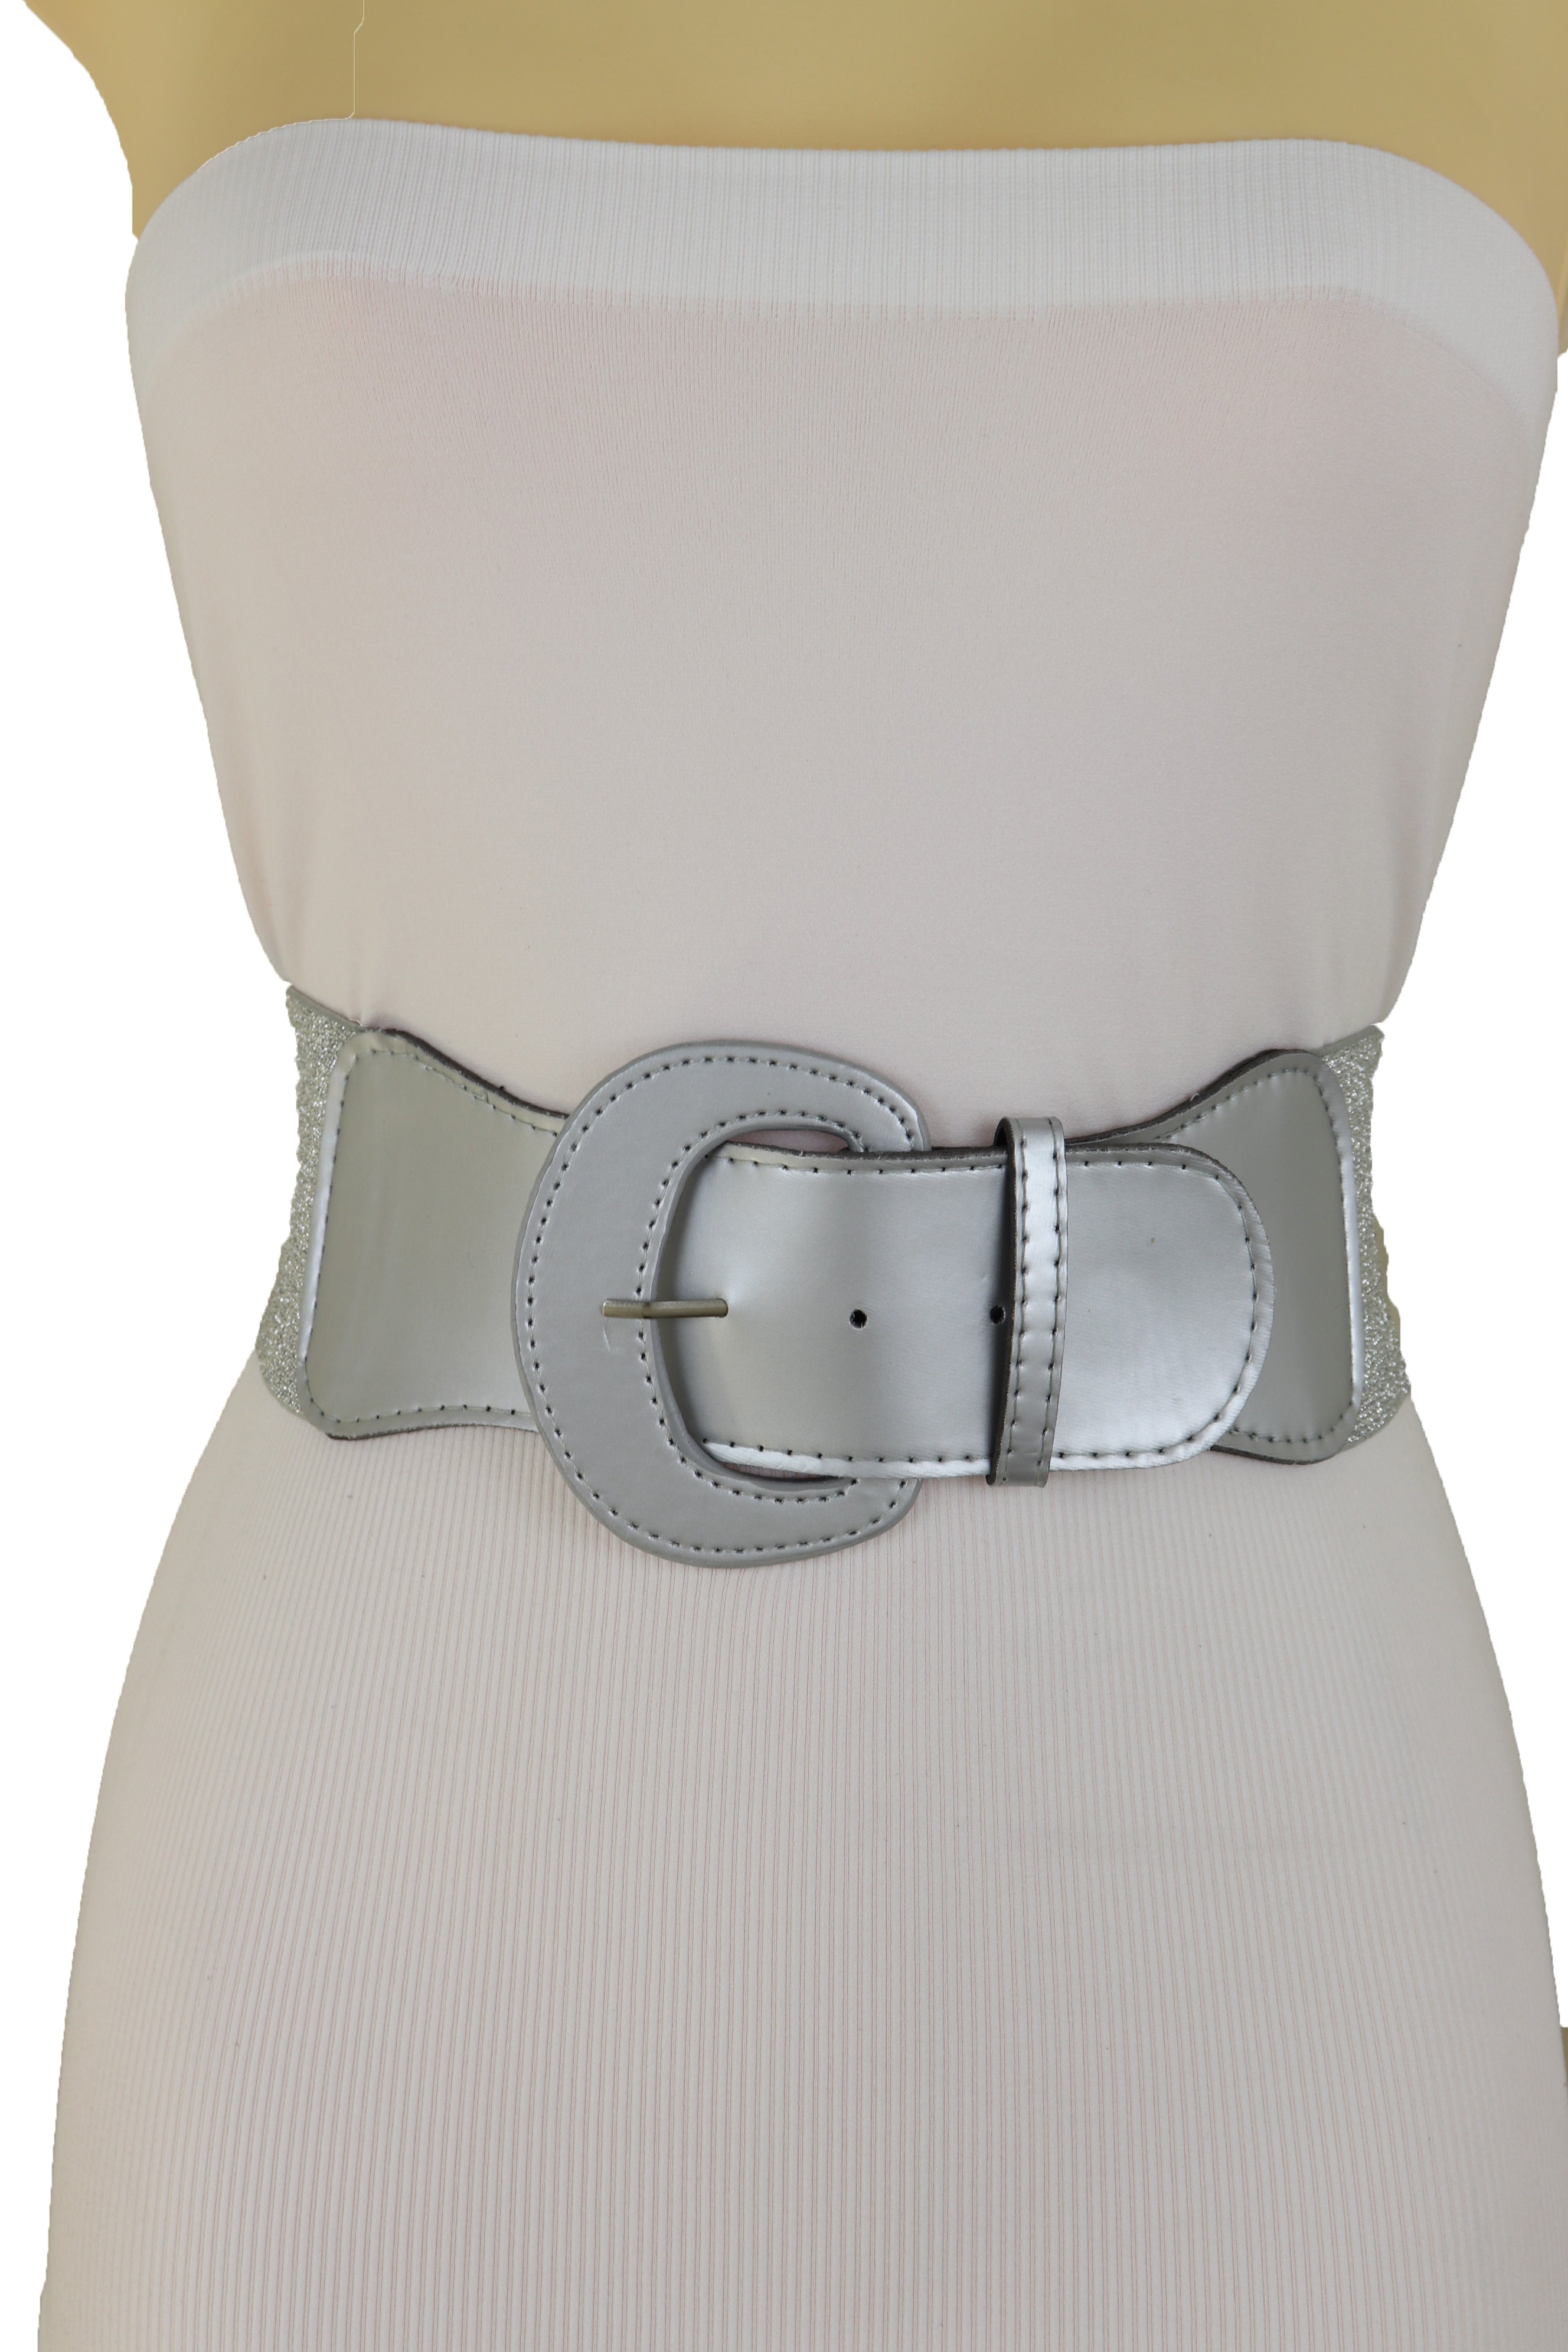 Silver Stretch Strap Cinch Waistband Fashion Belt Hip High Waist Size –  alwaystyle4you